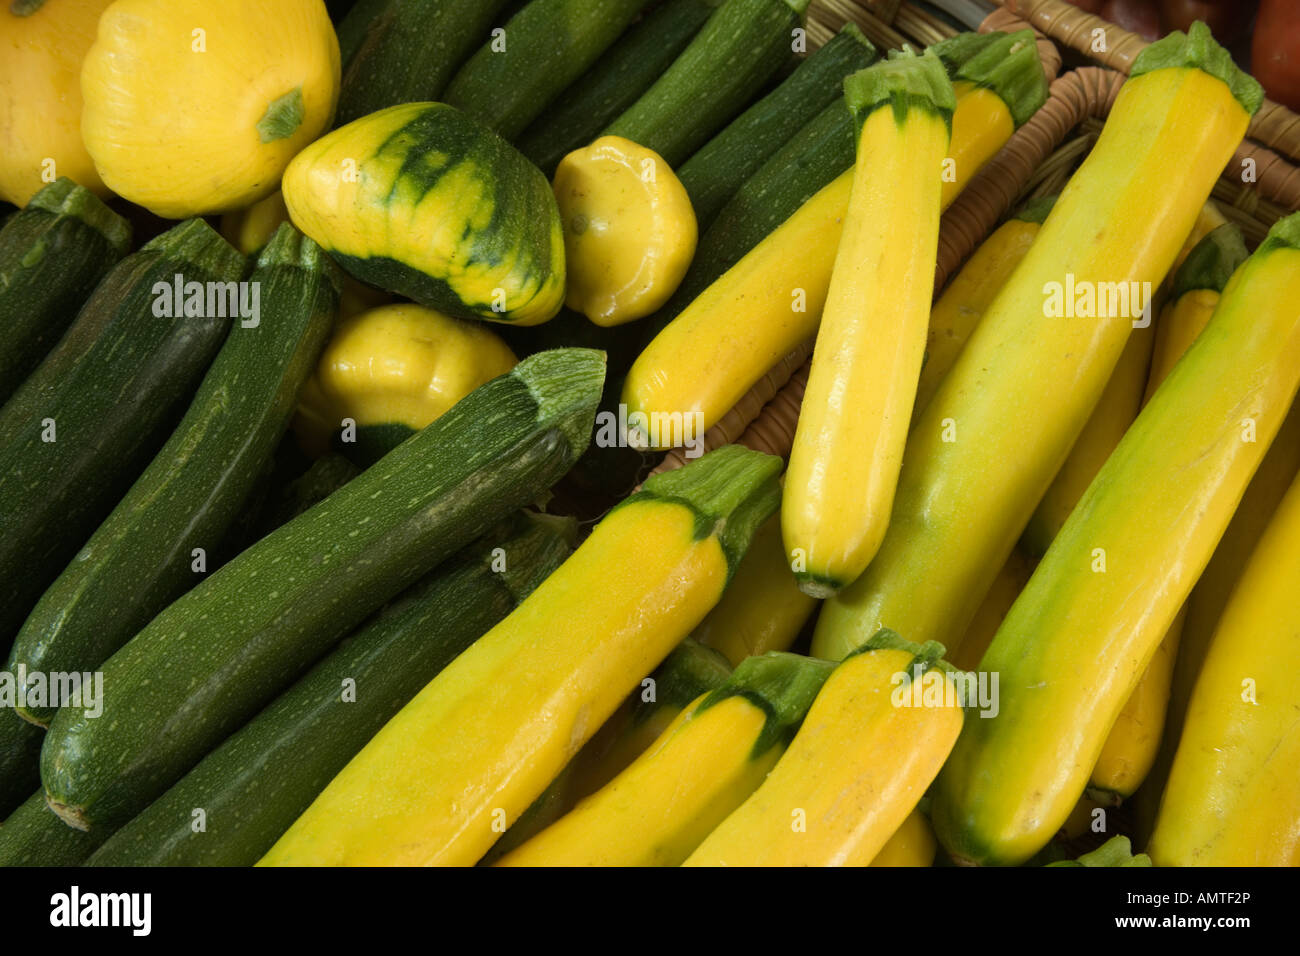 Harvested yellow & green Zucchini squash. Stock Photo